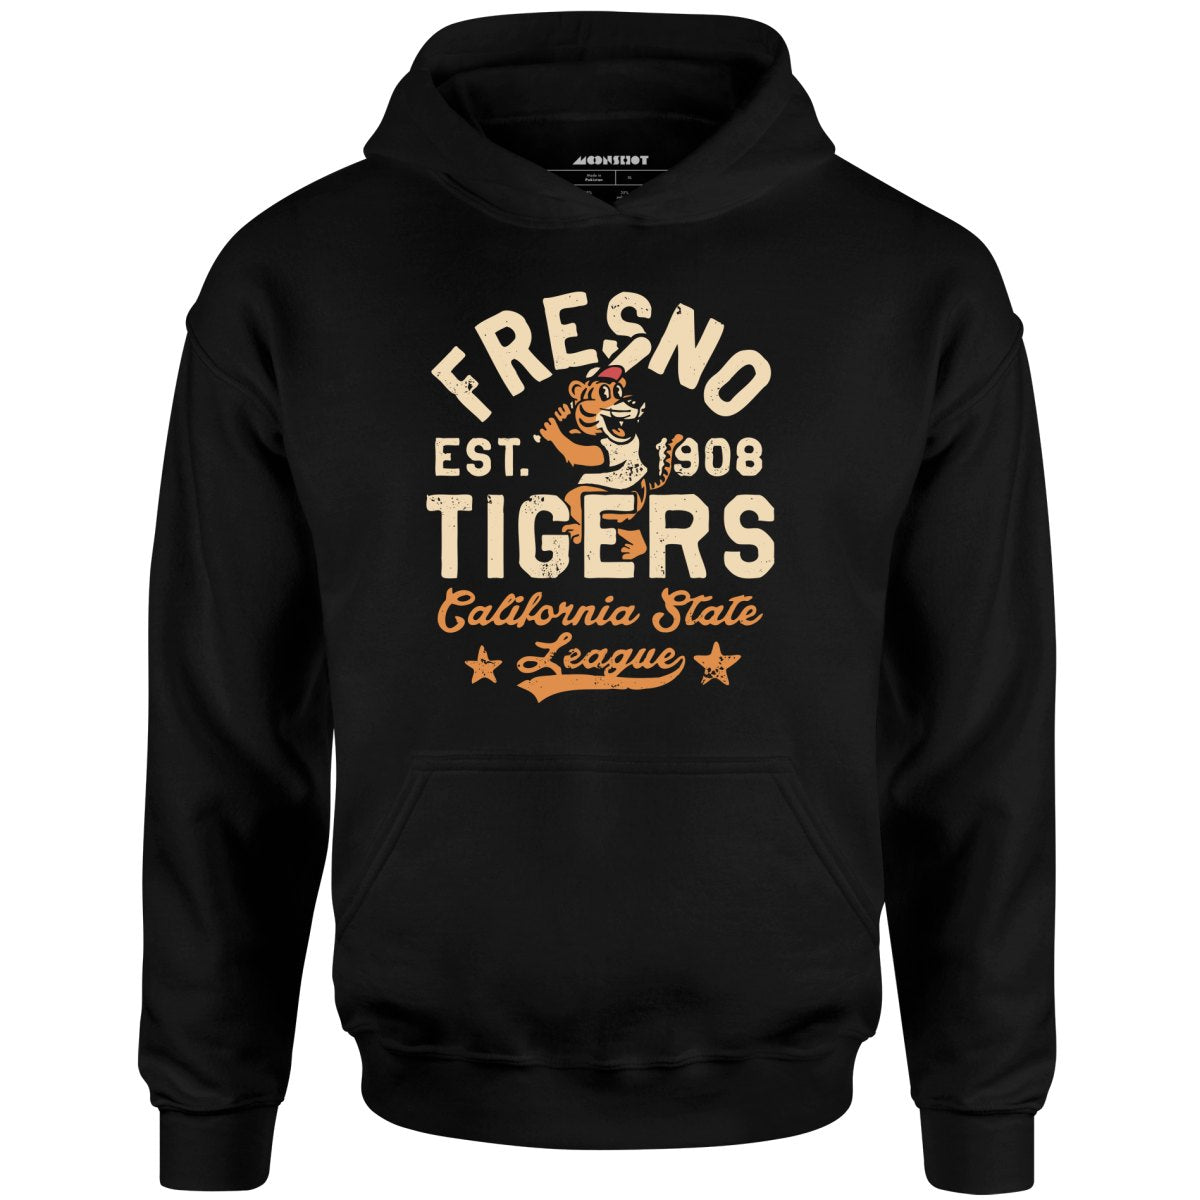 Fresno Tigers - California - Vintage Defunct Baseball Teams - Unisex Hoodie